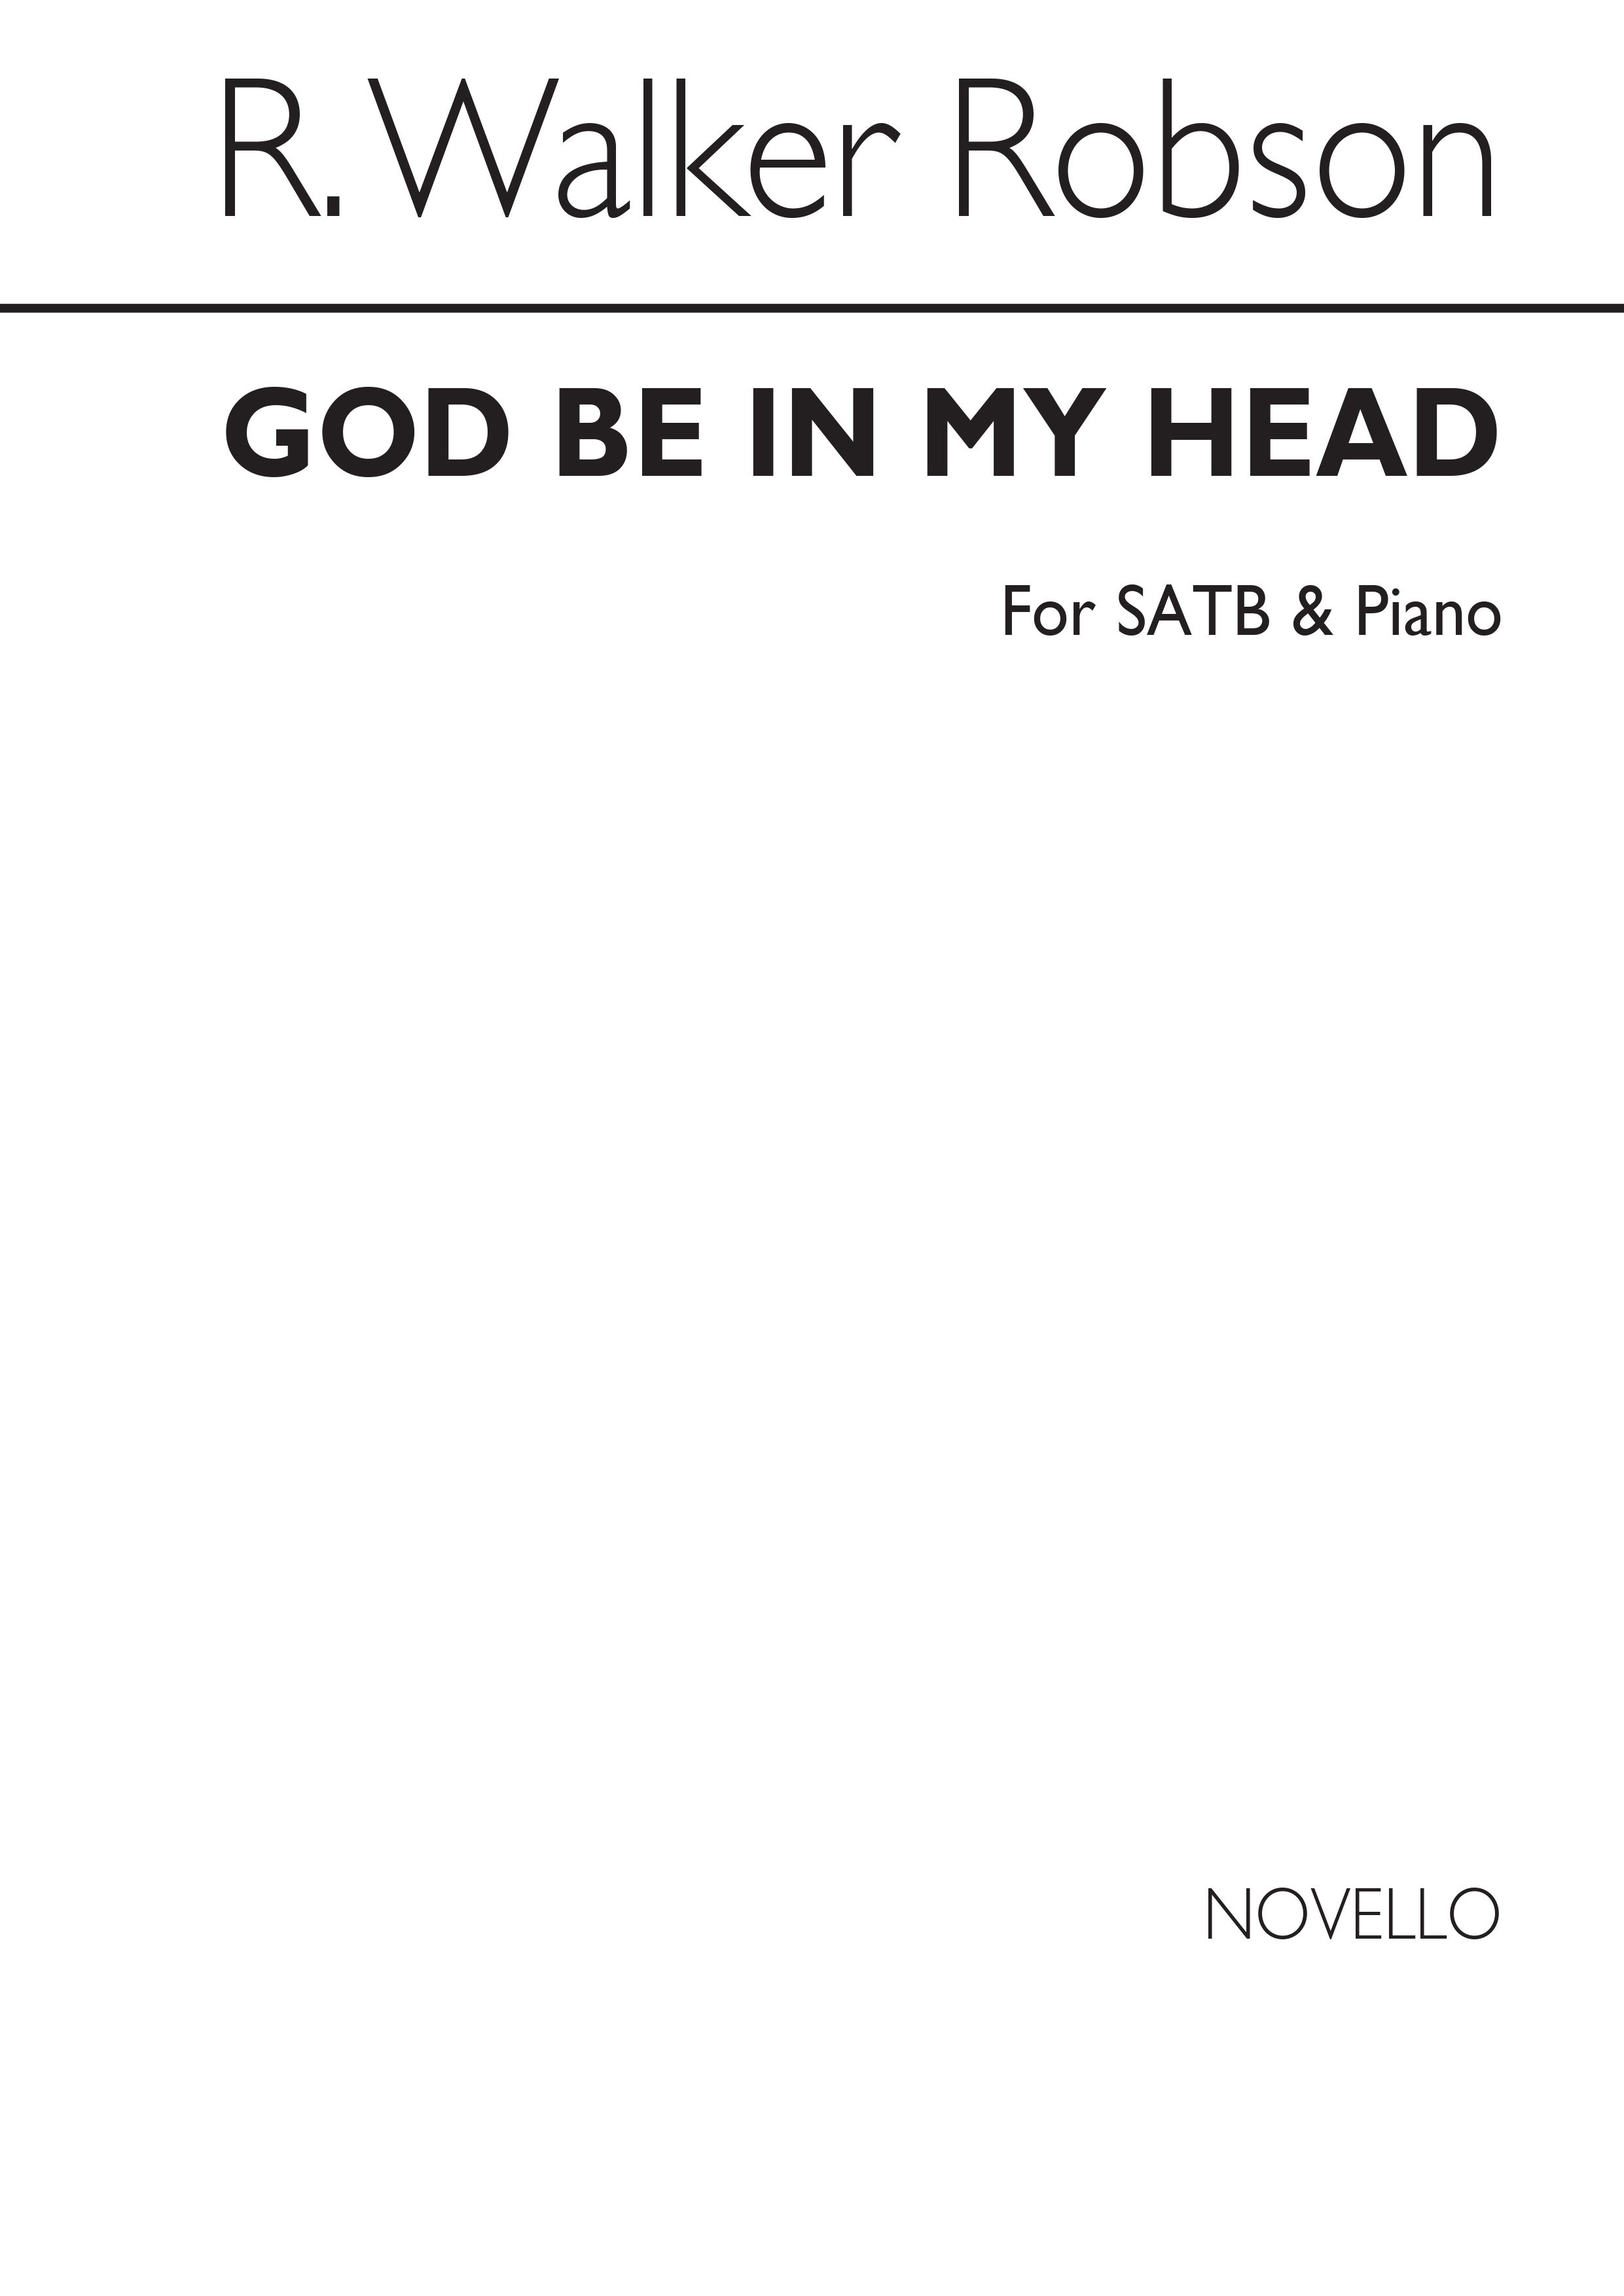 R. Walker Robson: God Be In My Head Satb/Piano